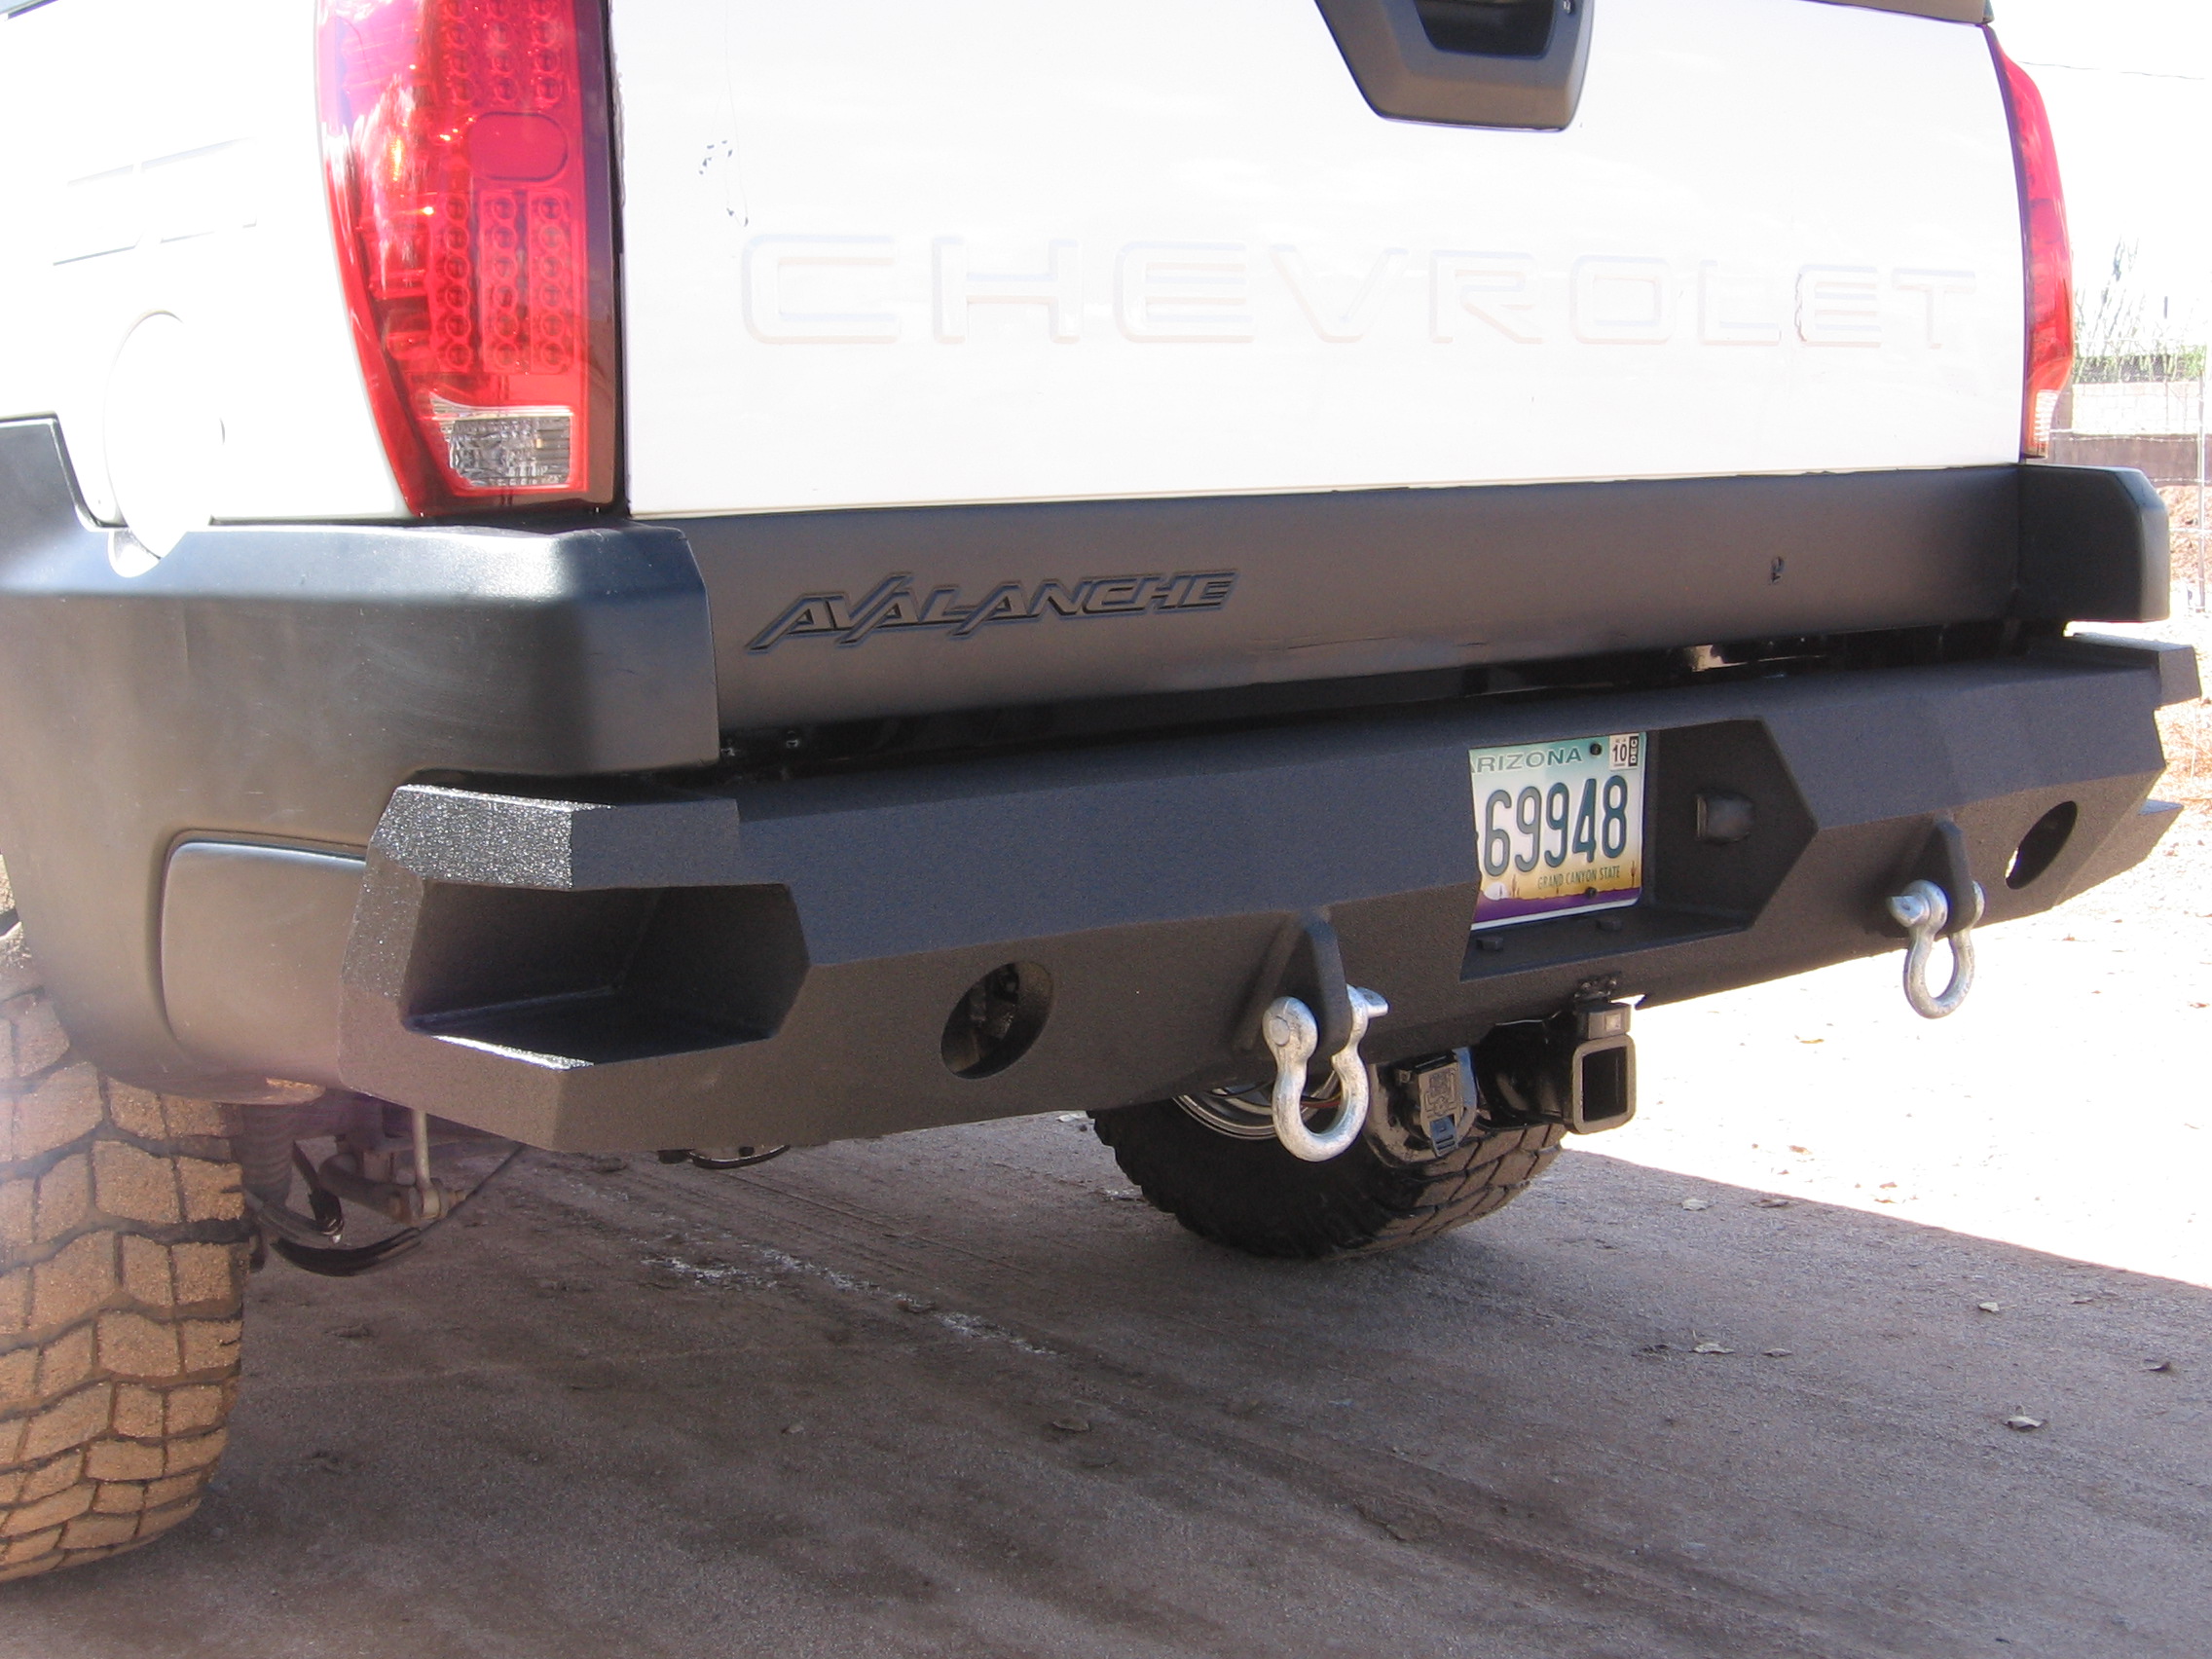 02-06 Chevrolet Avalanche rear base bumper